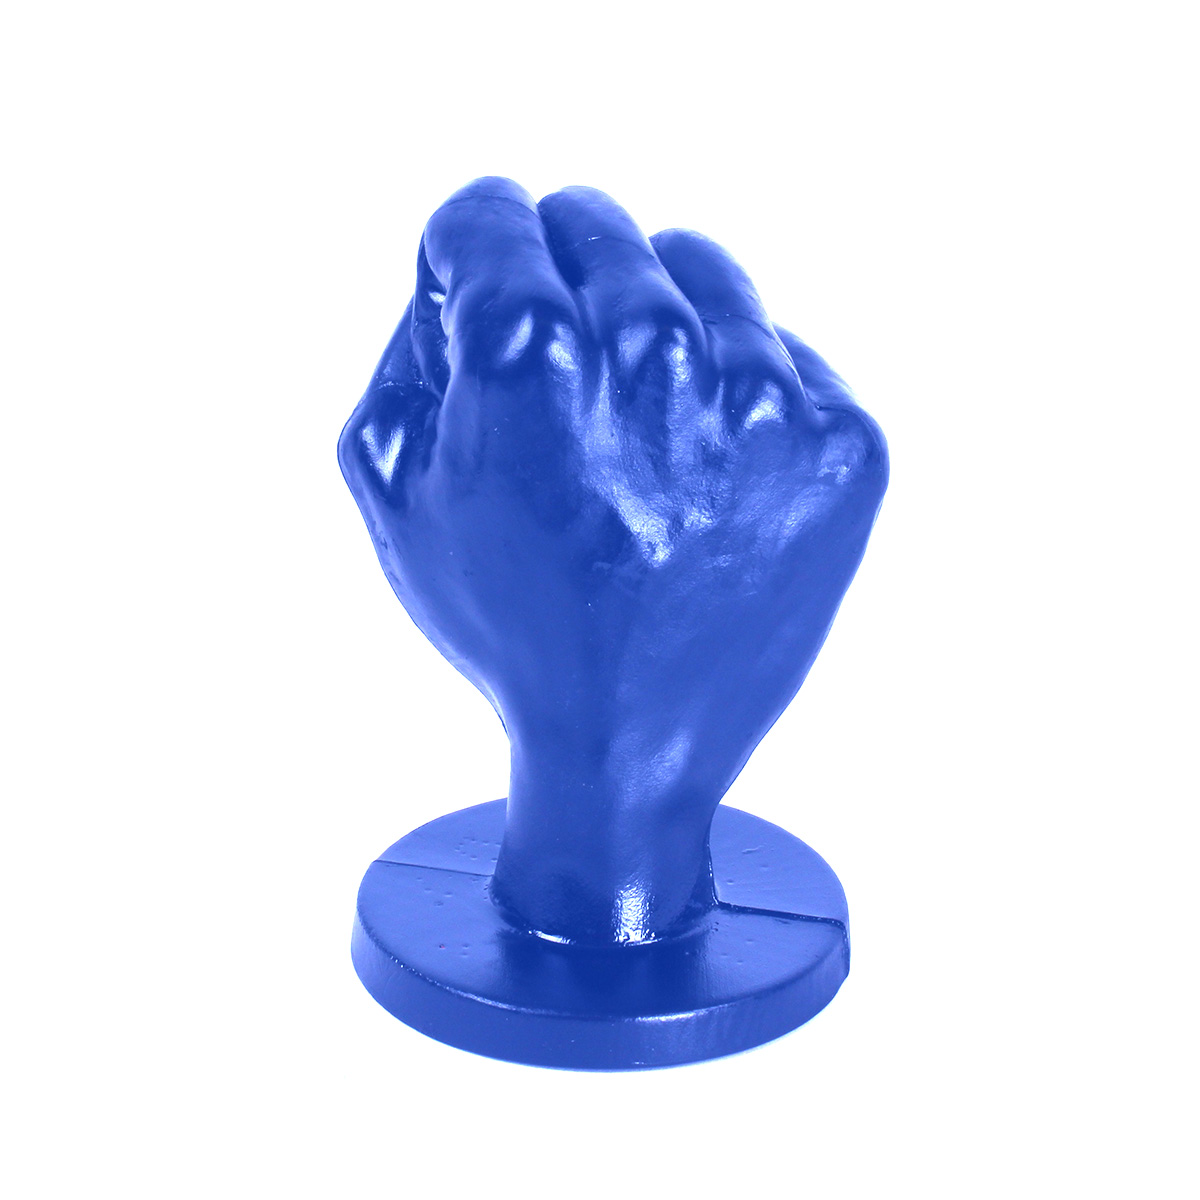 All-Blue-Fist-Medium-ABB93-115-ABB93-1